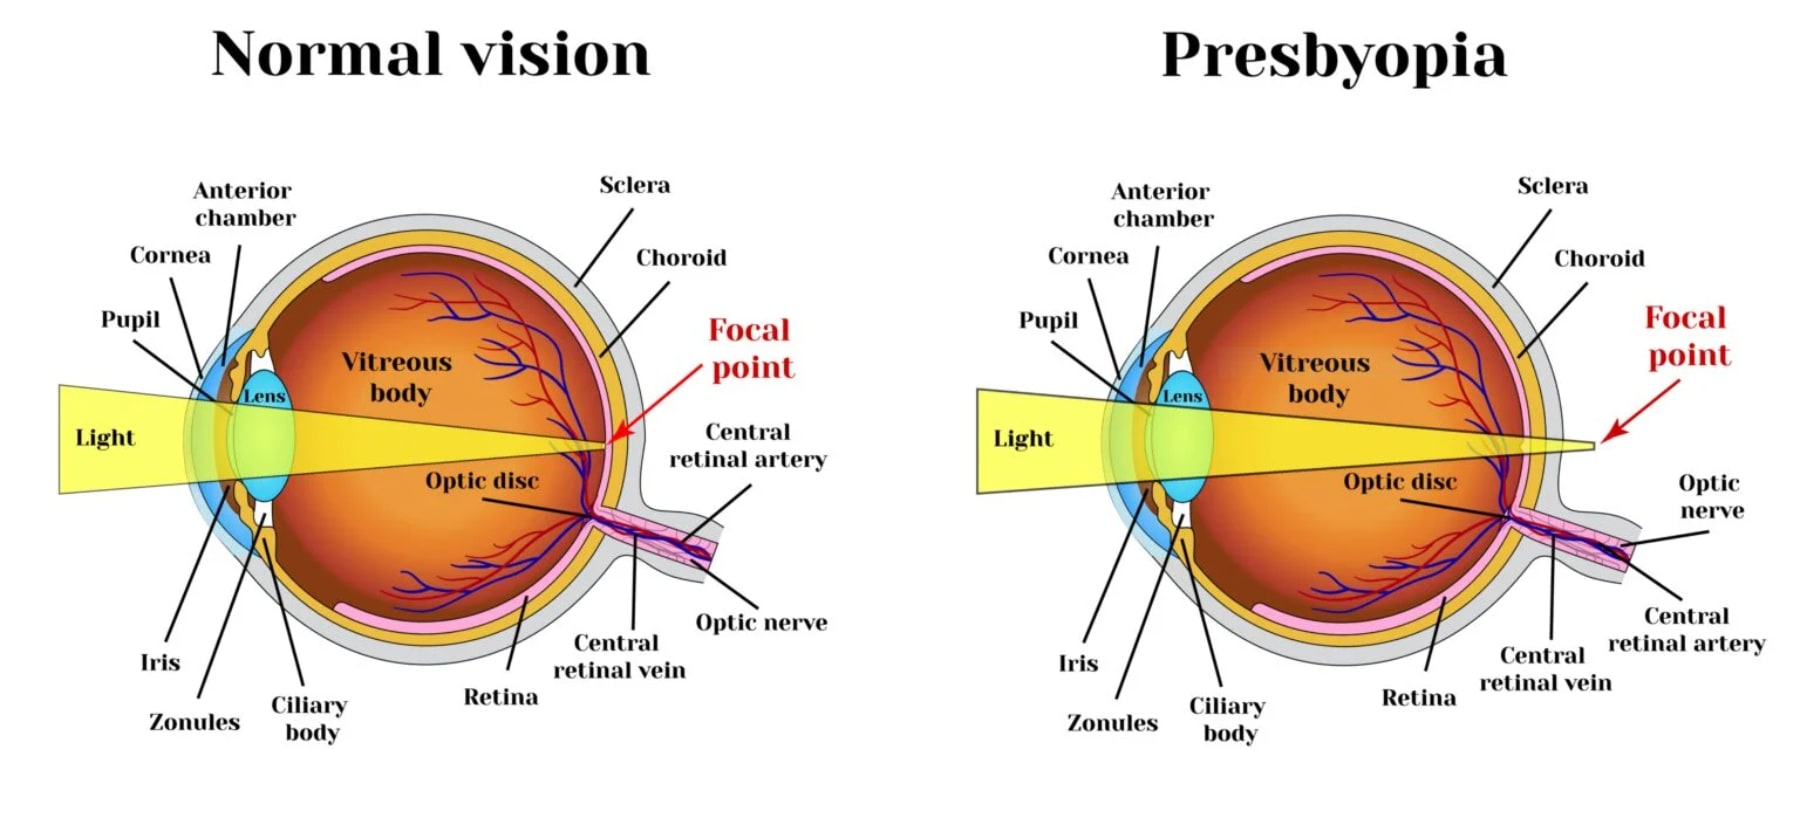 presbyopia-diagram